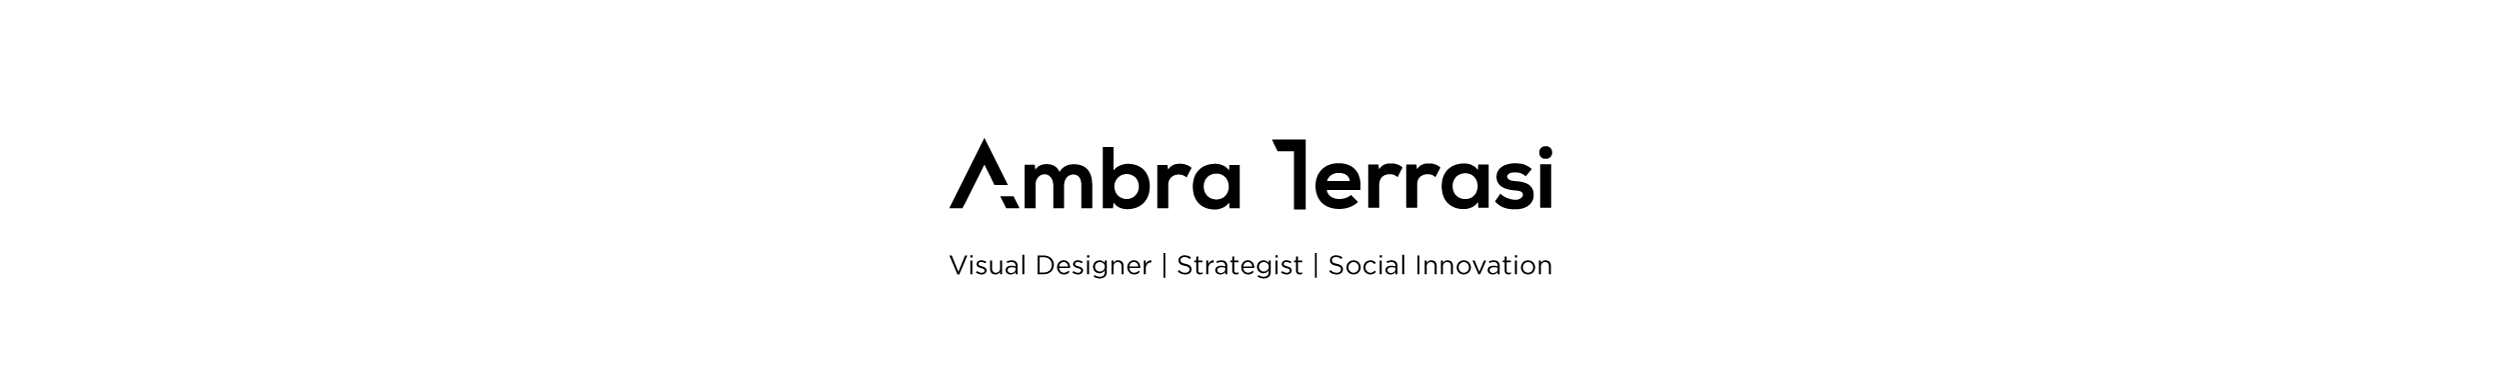 Ambra Terrasi's profile banner